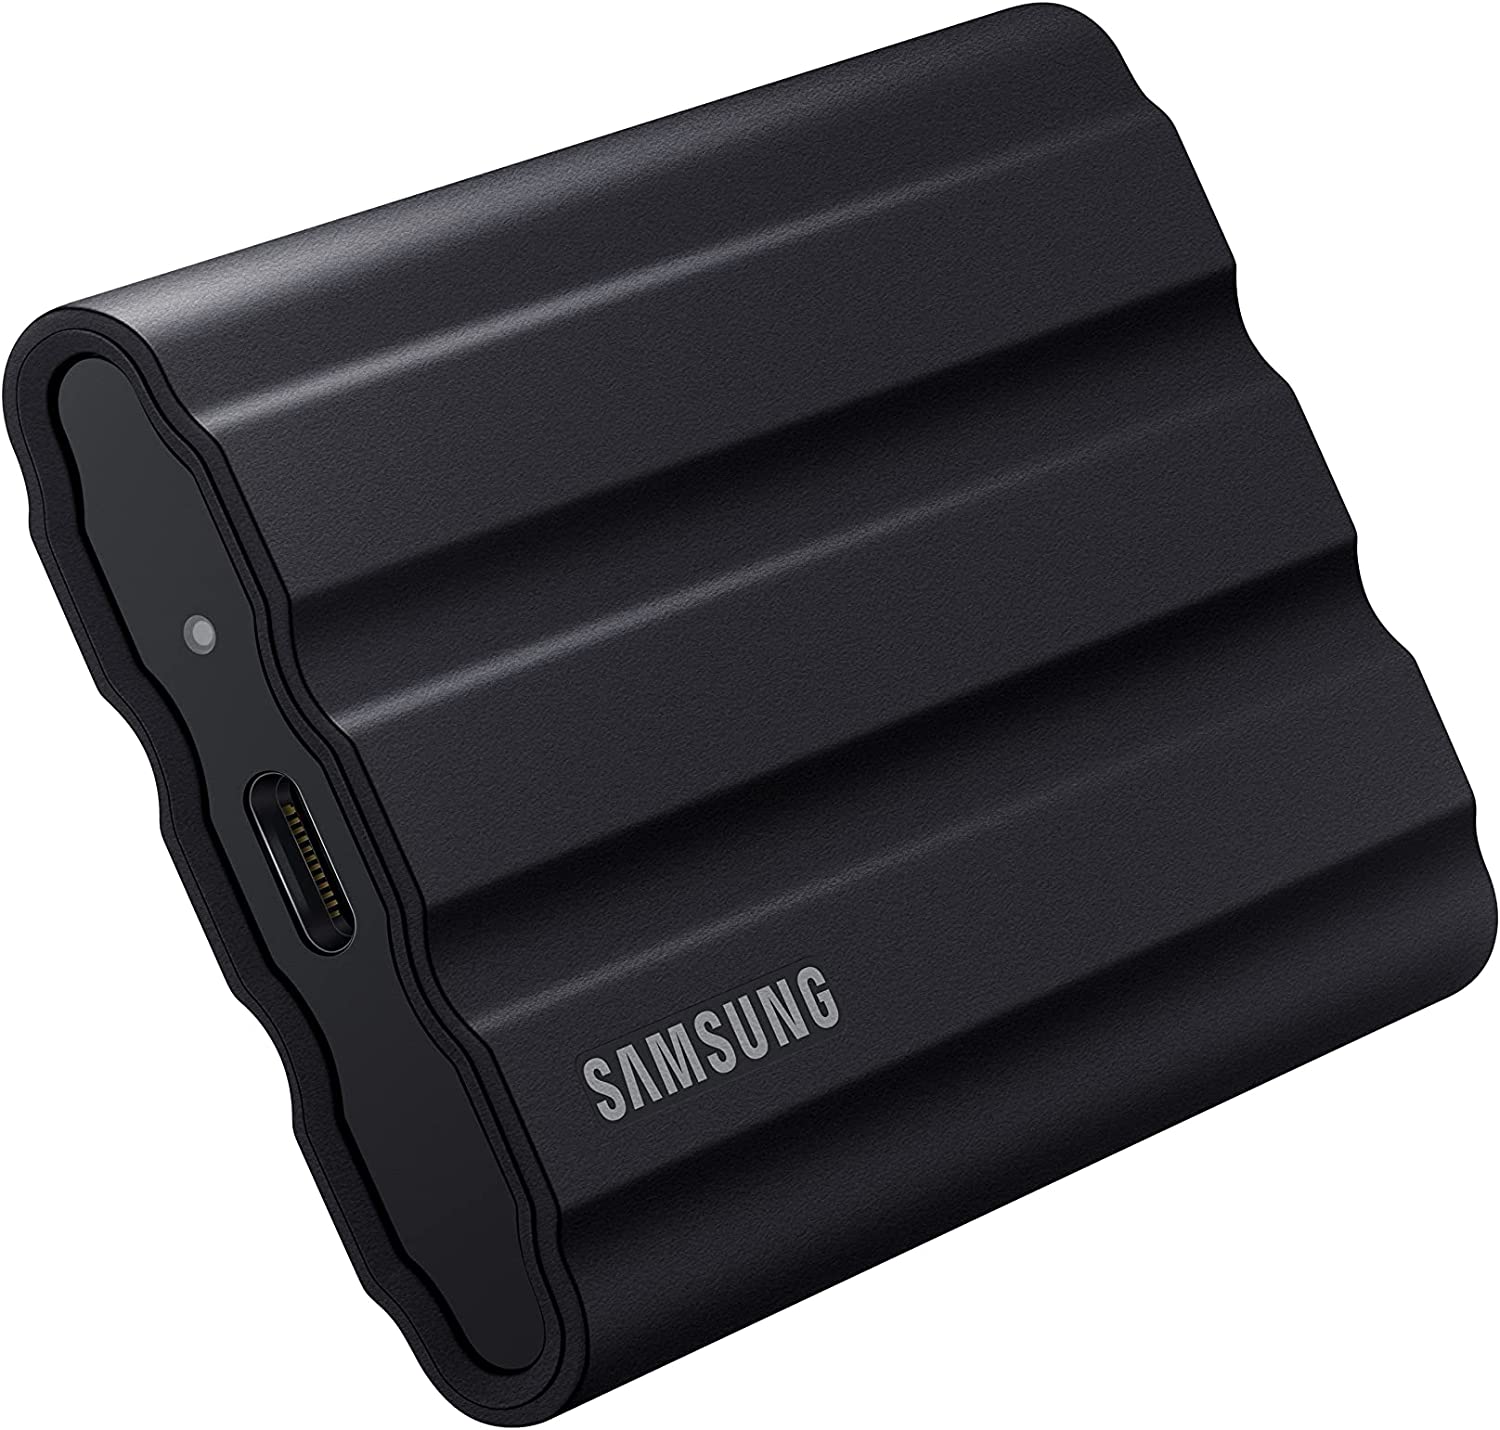 SSD externe Samsung SSD Externe T7 Shield - 1 To, noir